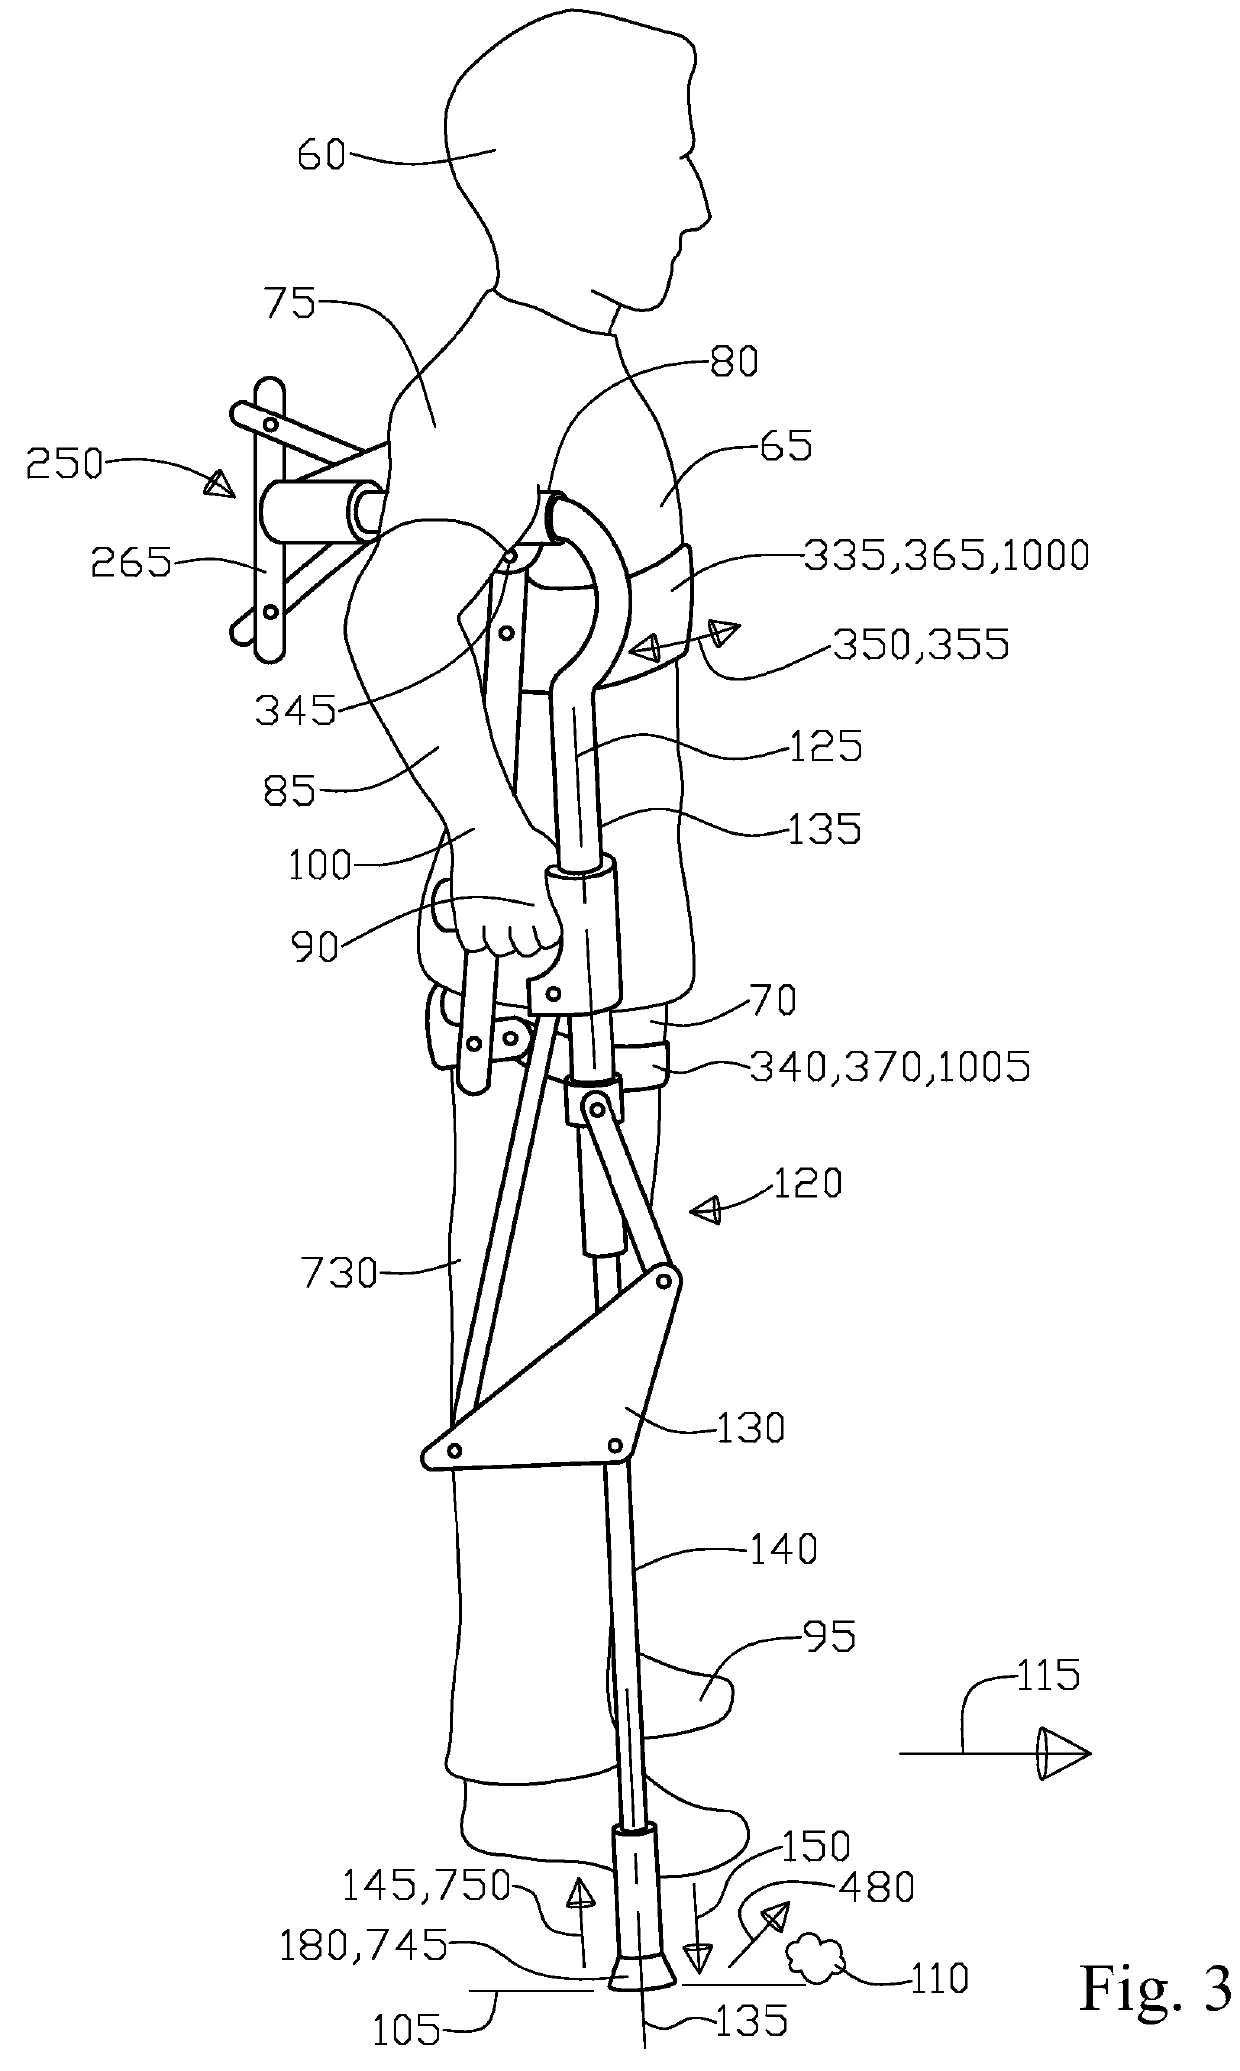 External structural brace apparatus